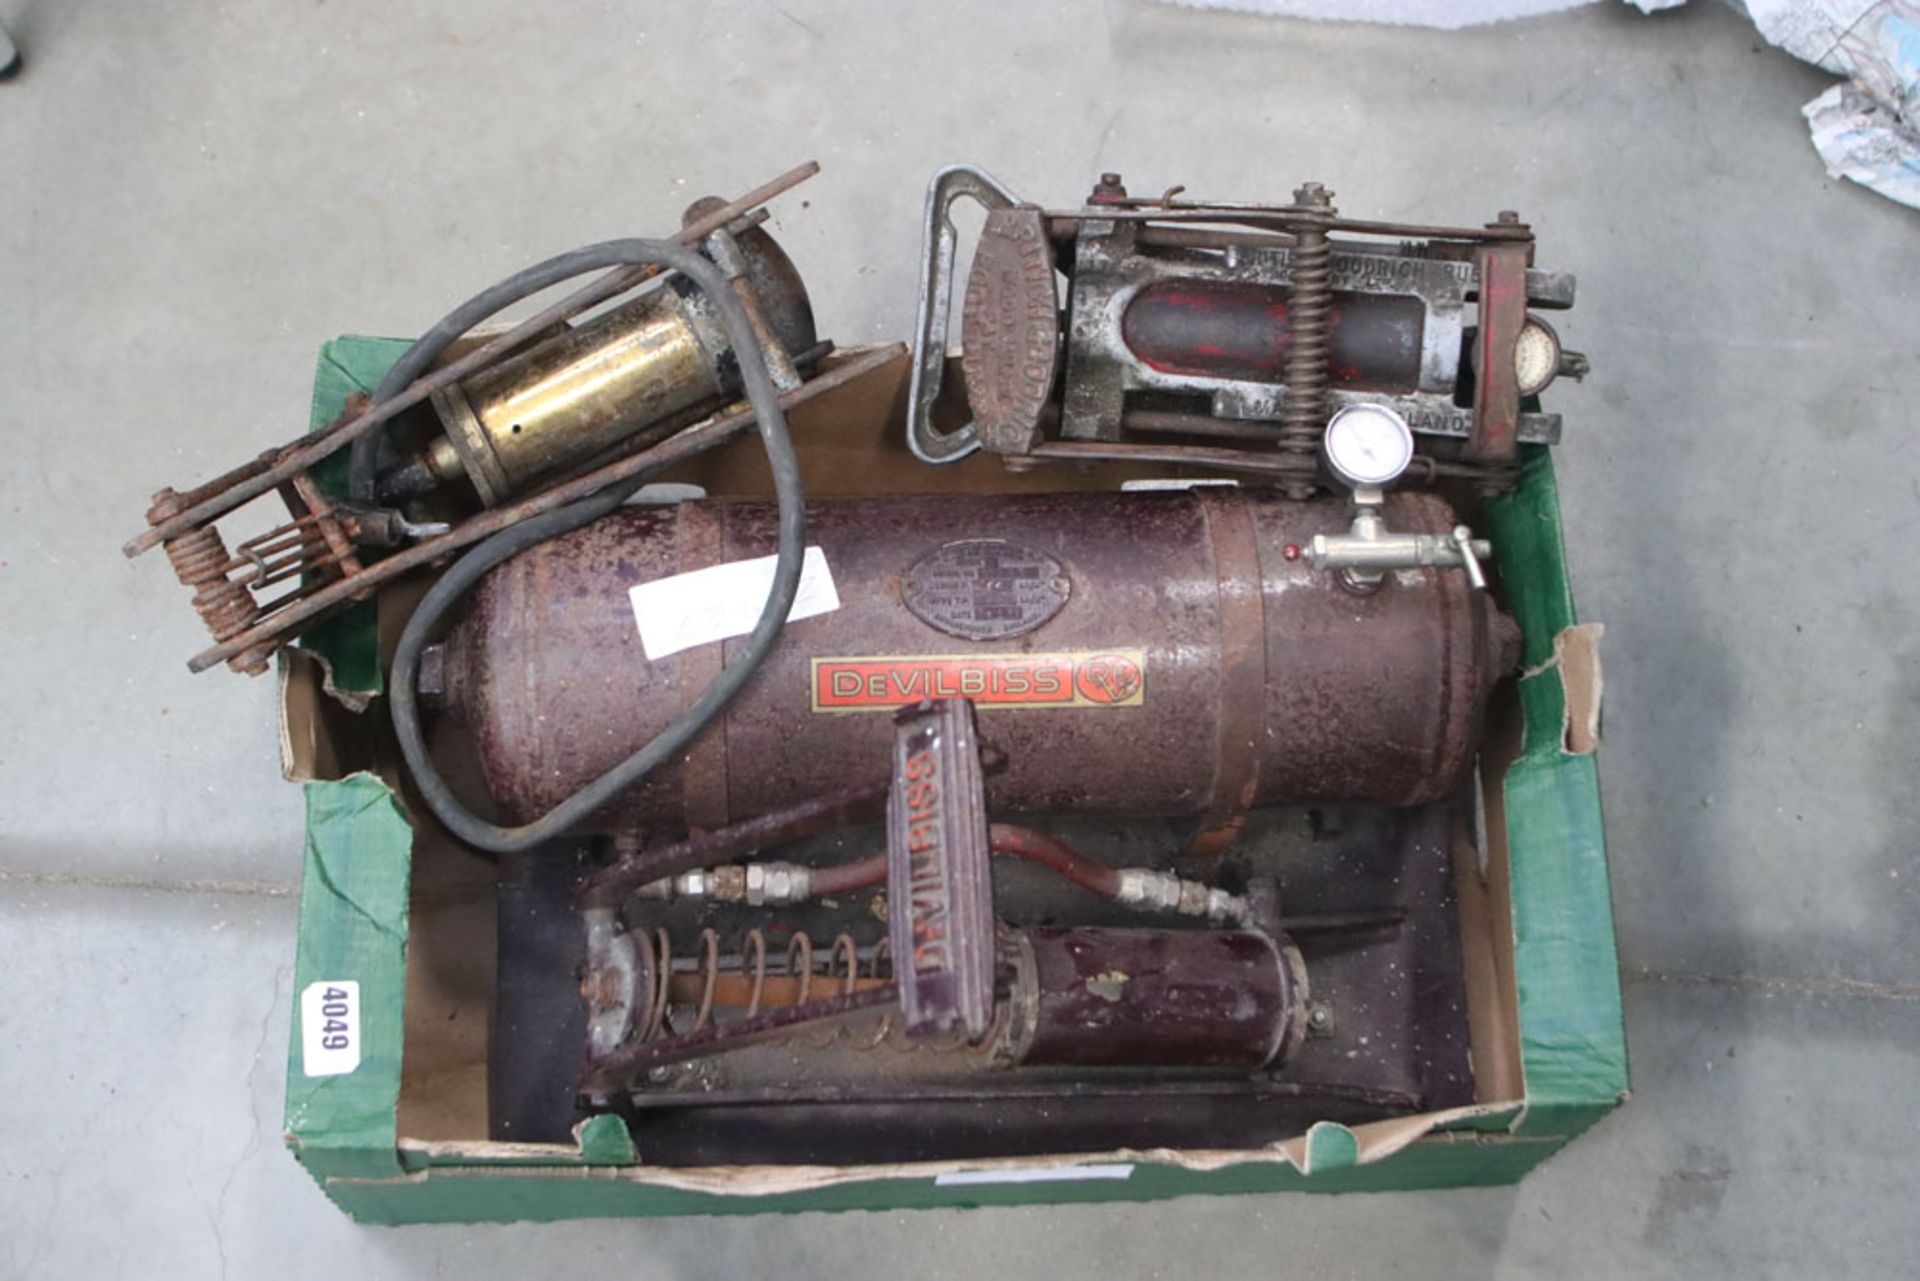 4053 - Box of vintage foot pumps